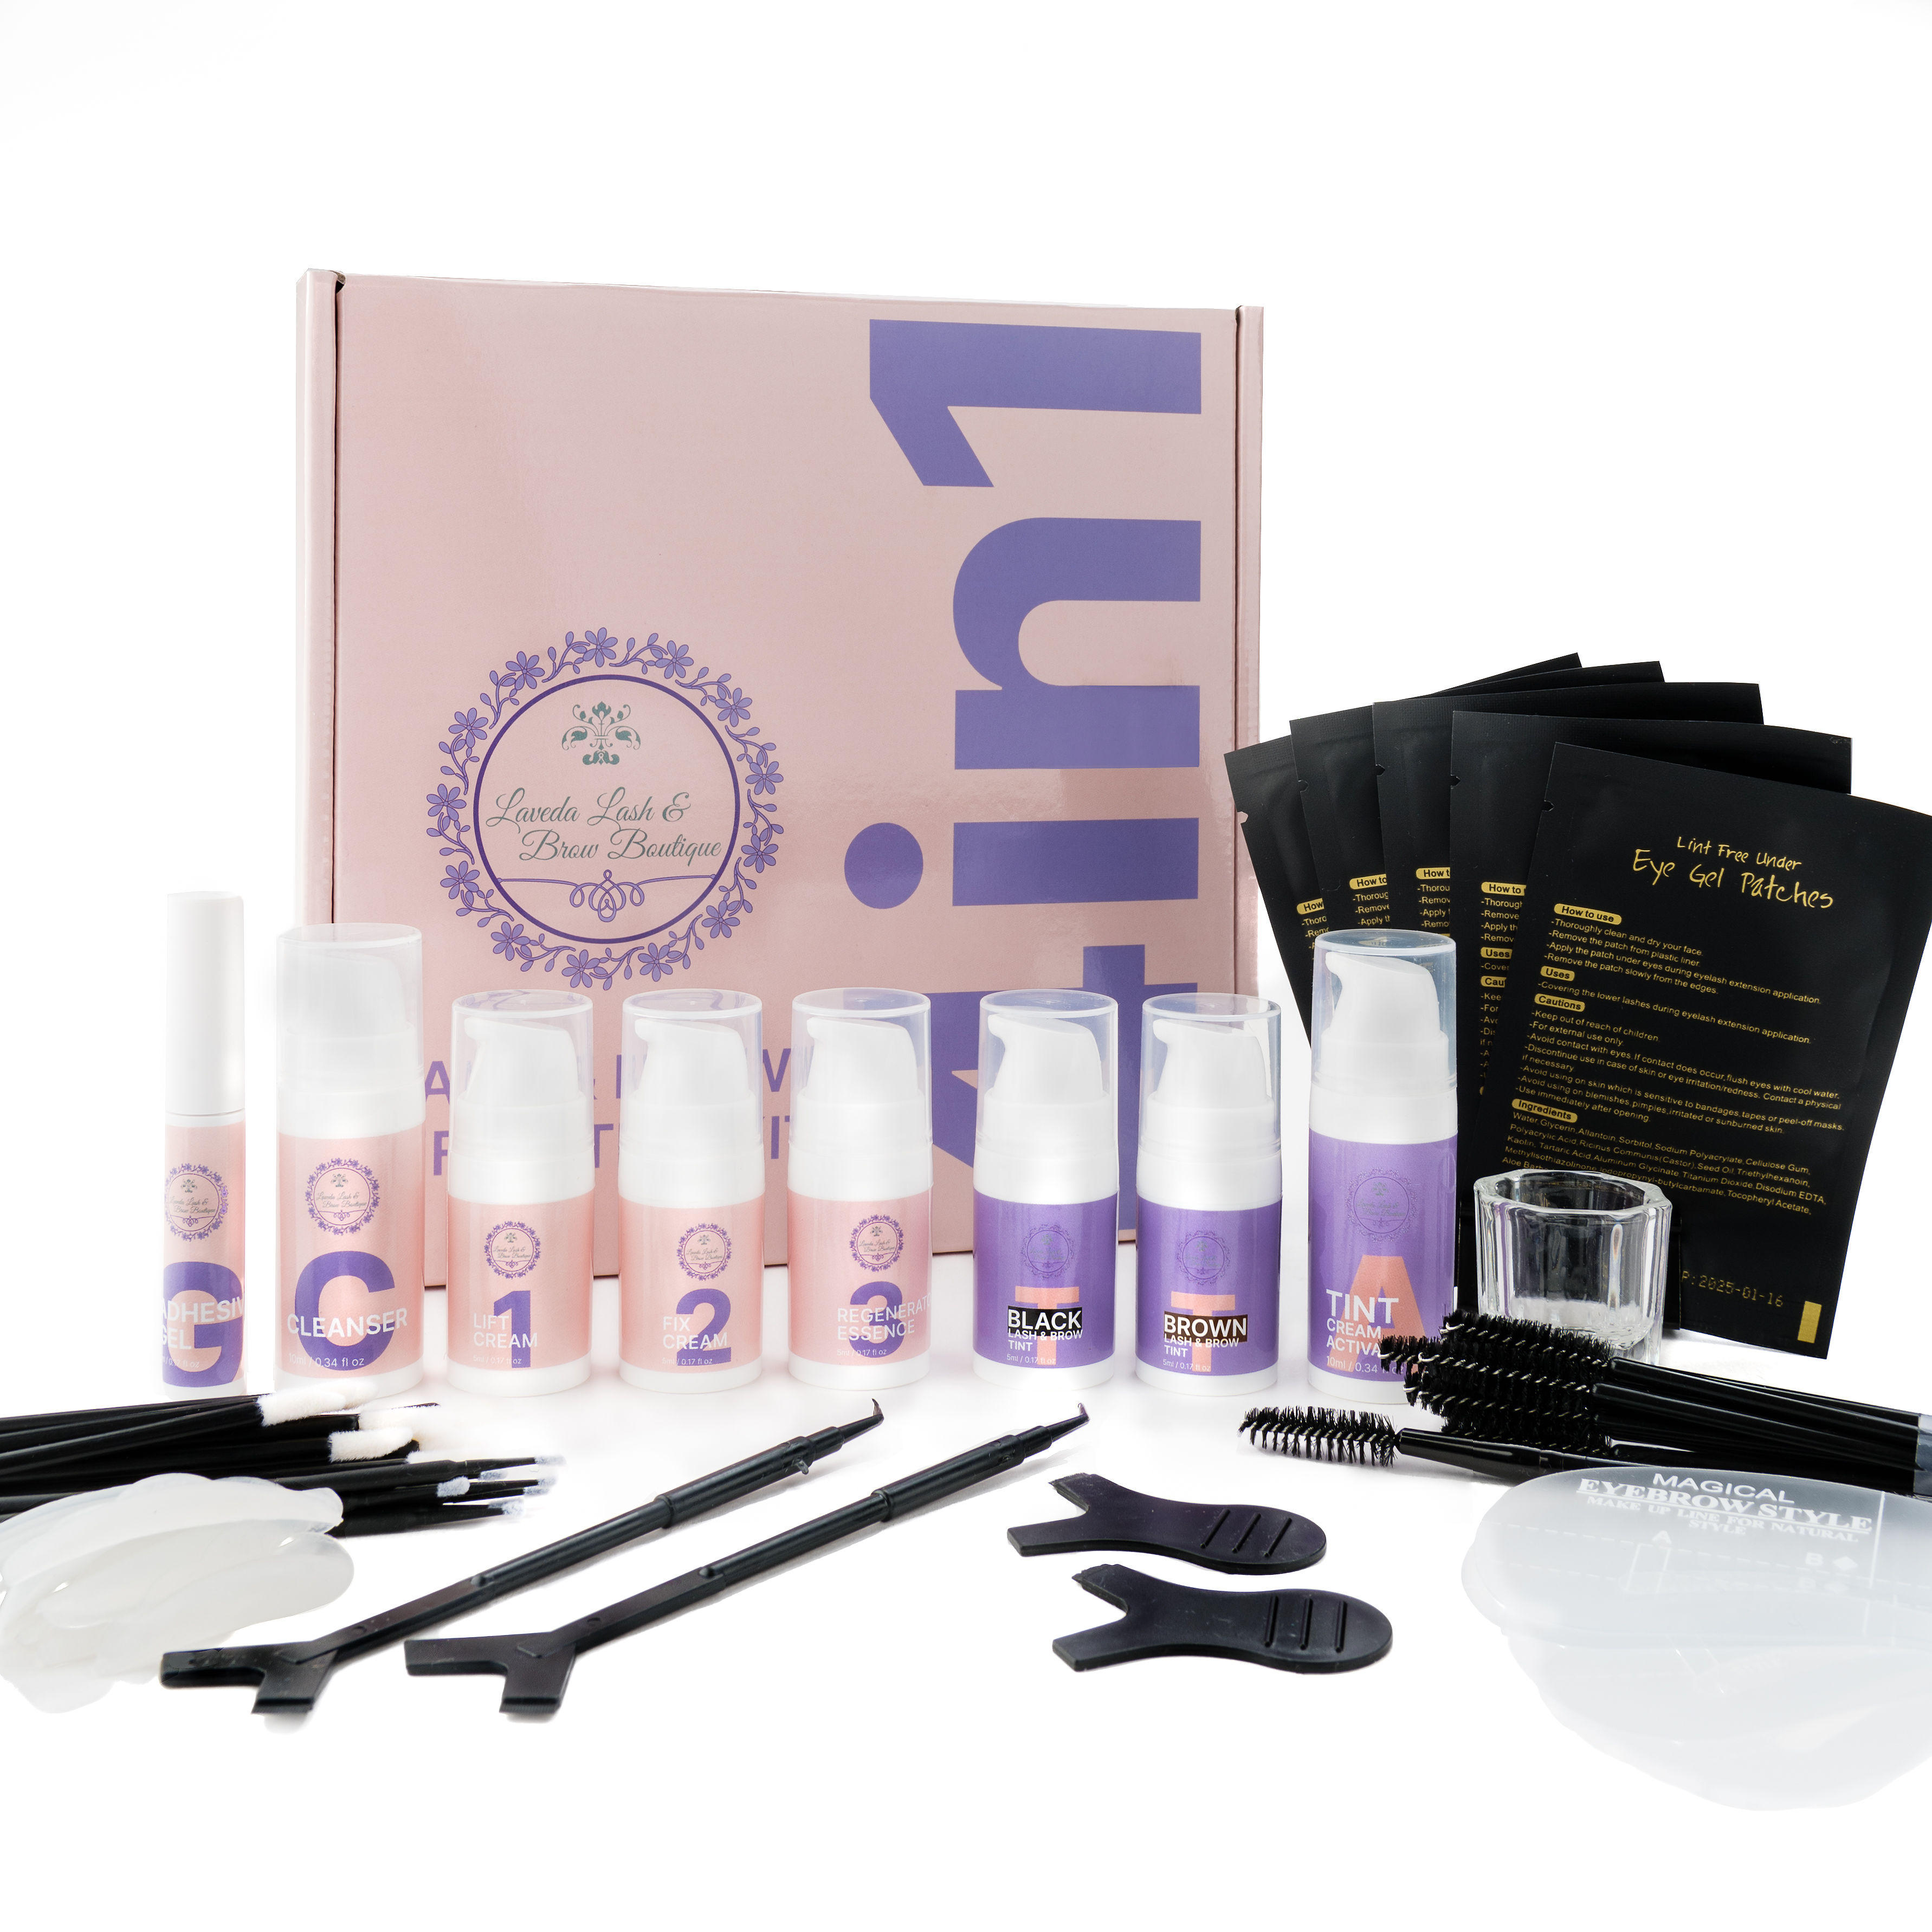 Lash & Brow Lift + tint 4 in 1 Lash Lift Perm Kit Professional Eyelash Extension Eyebrow Lamination Kit